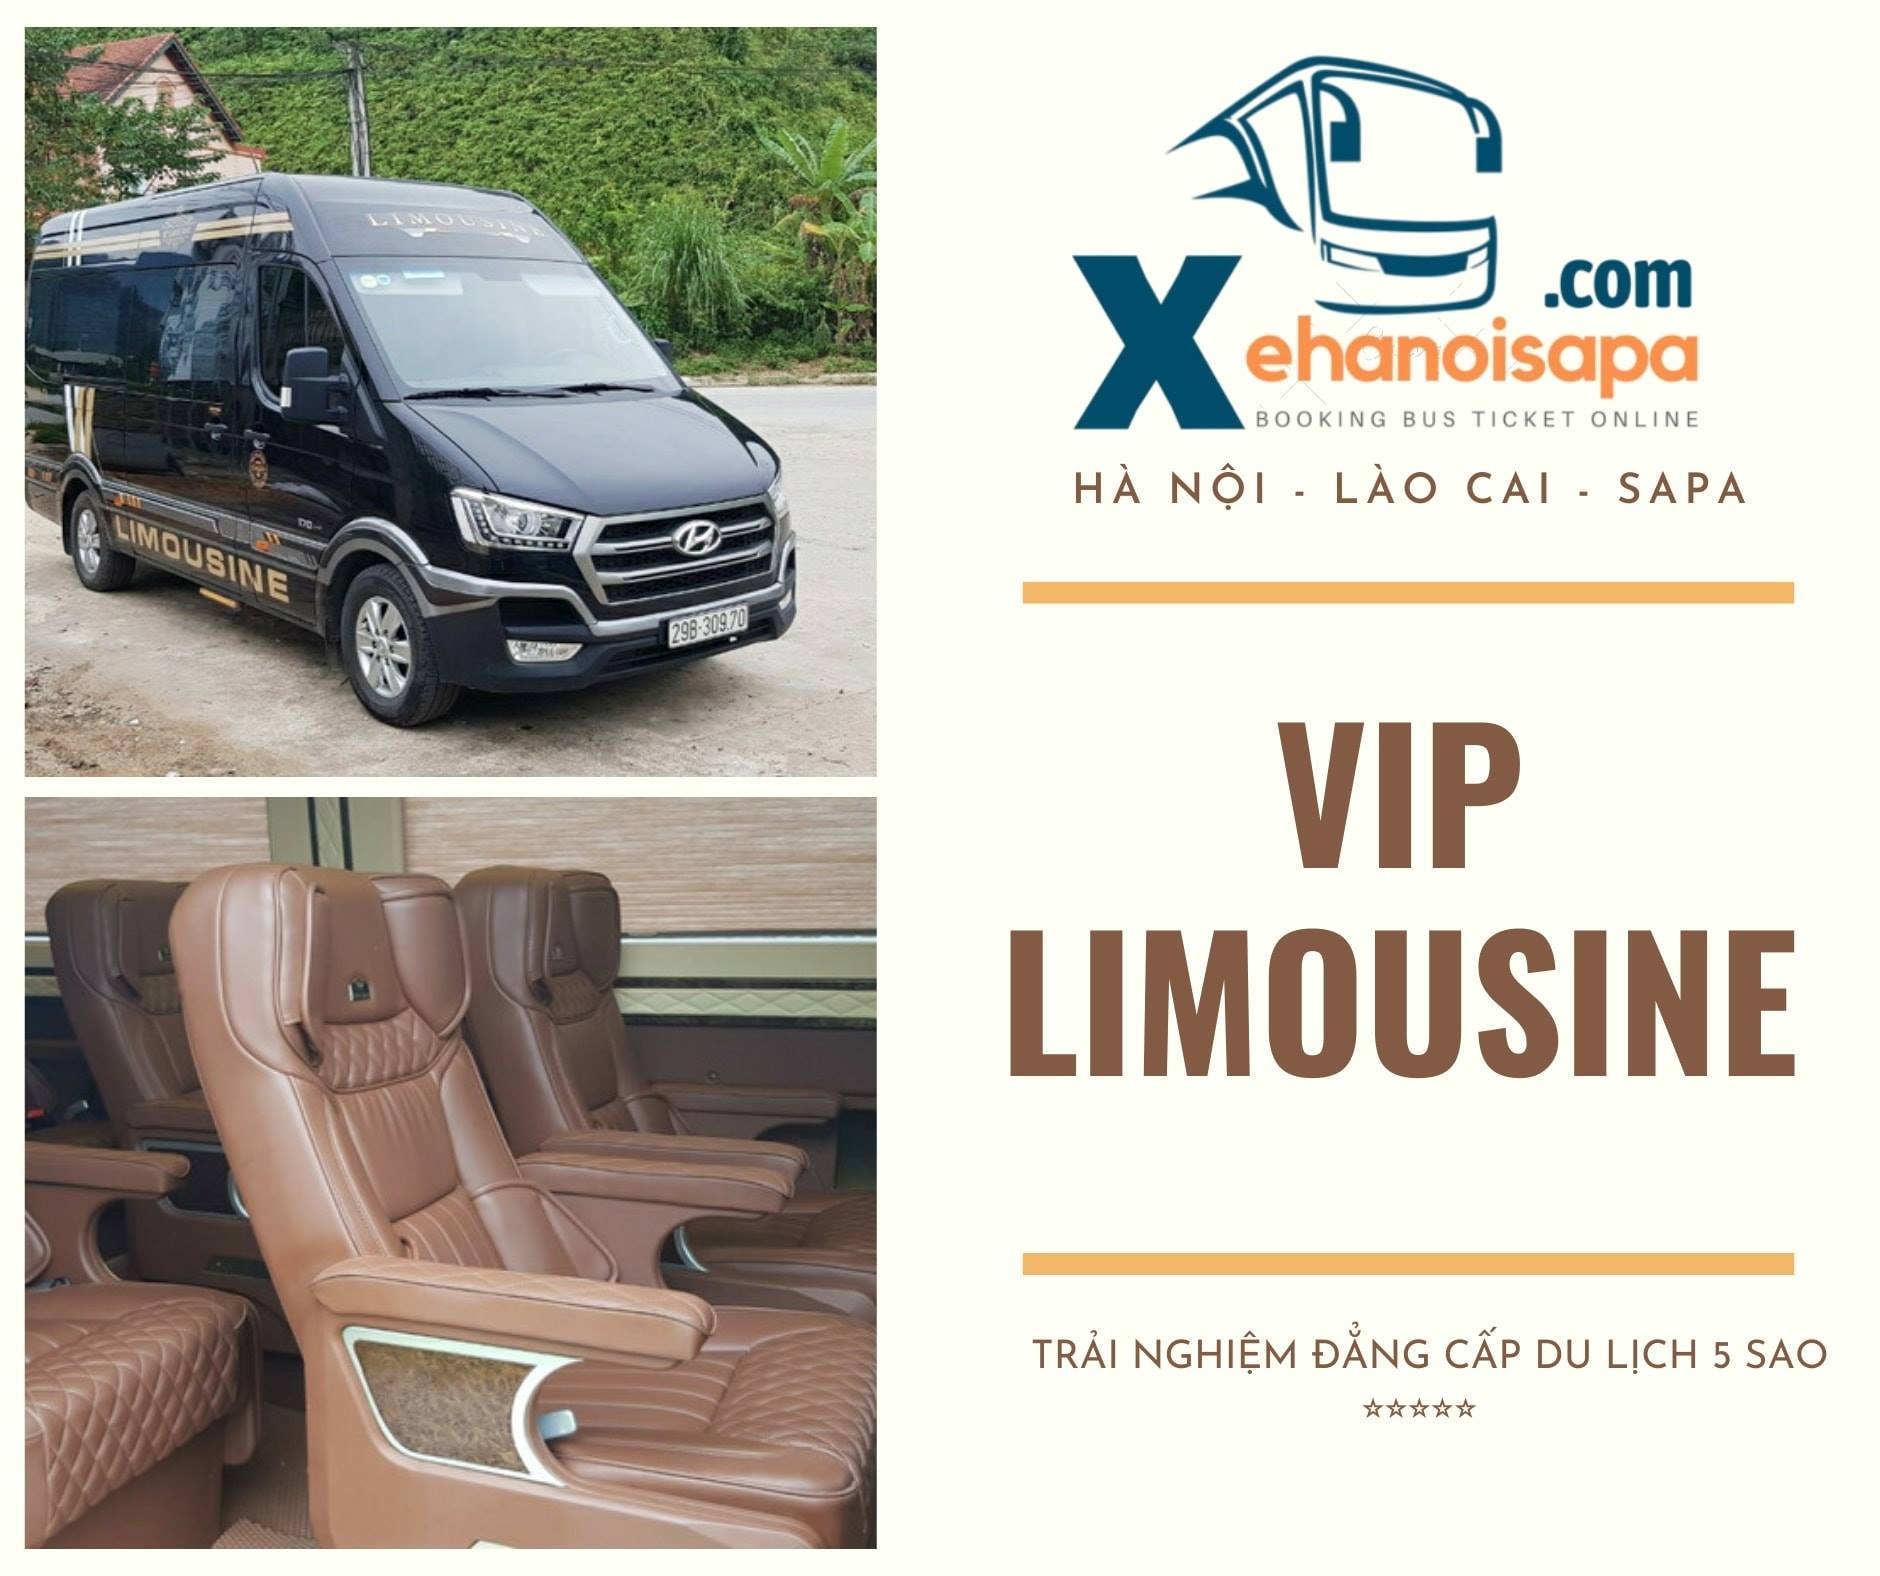 Hãng xe Dream Transport Limousine - Booking nhanh tại Xehanoisapa.com